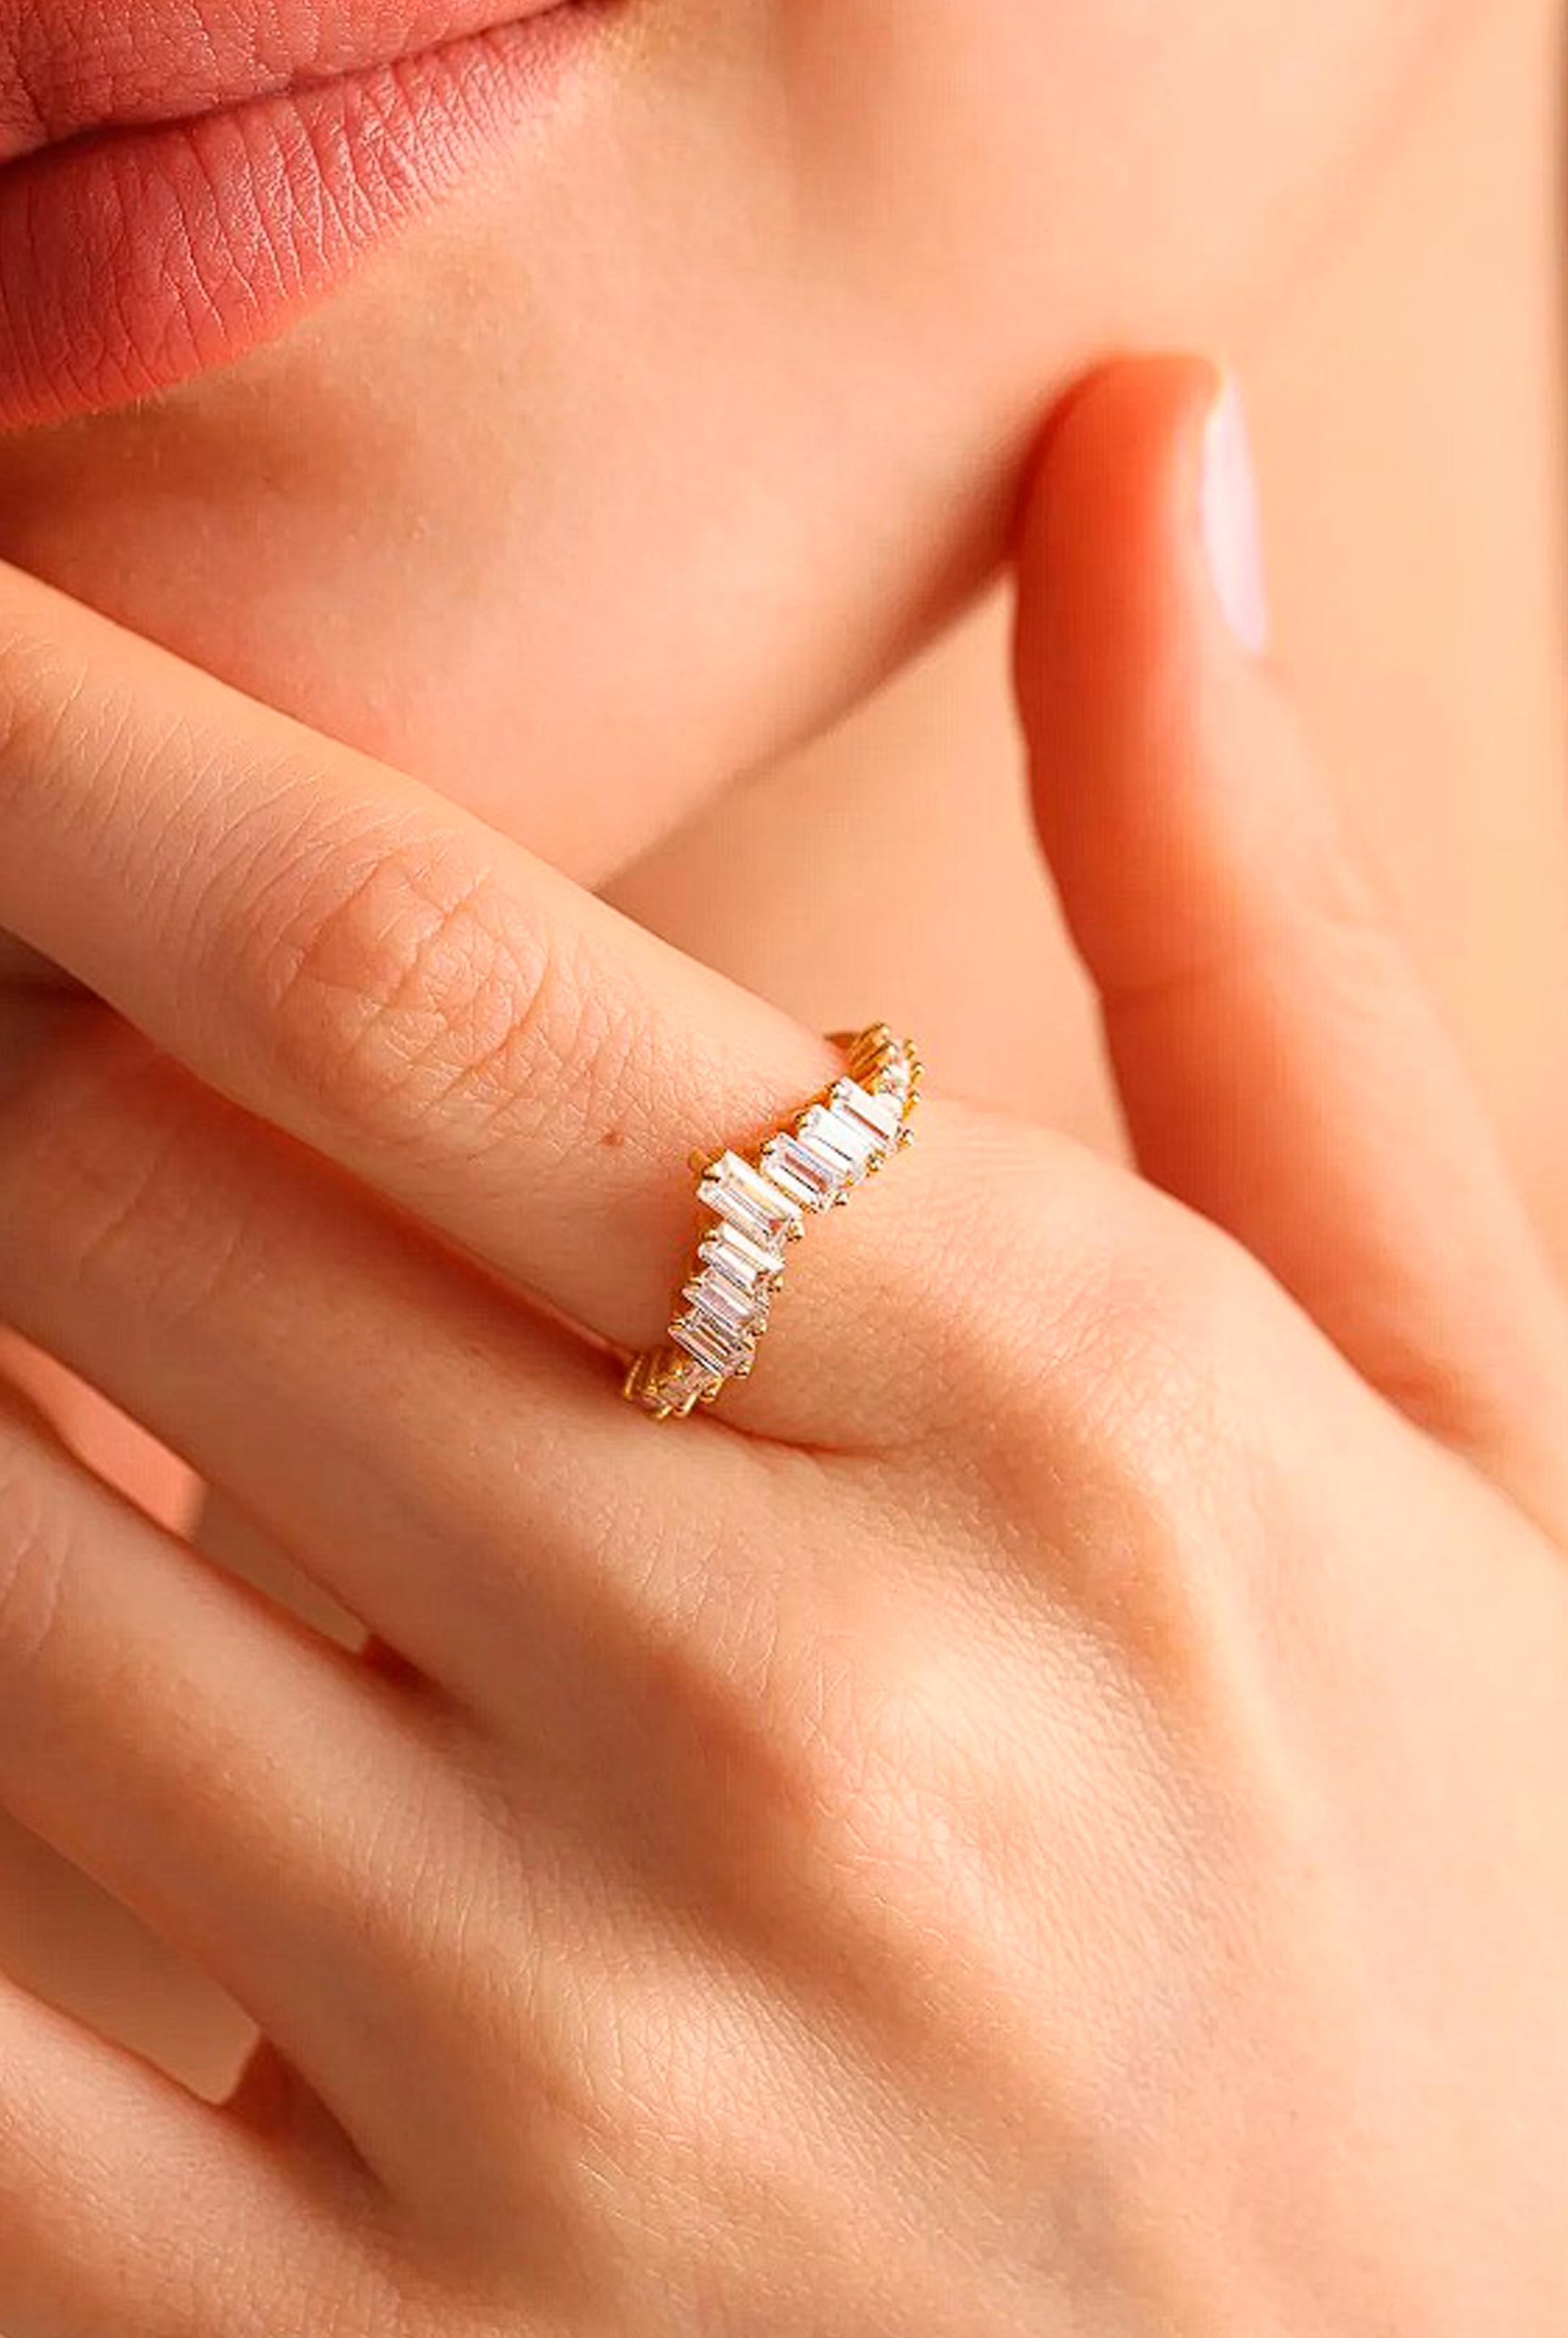 For Sale:  Baguette cut moissanite 14k gold engagement ring. 6